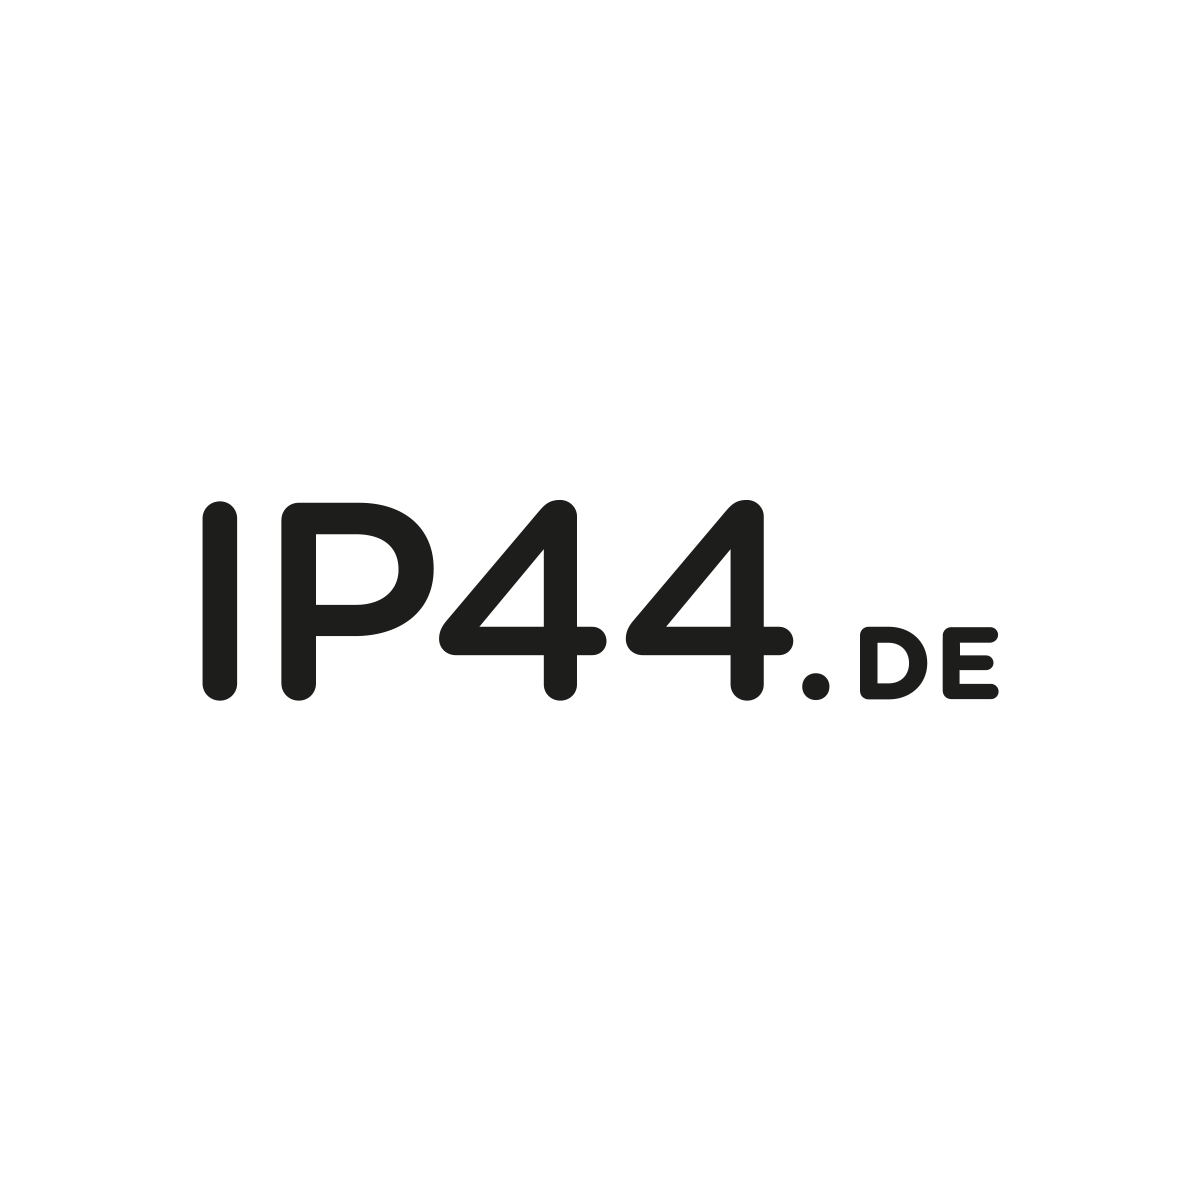 IP44.de lin base słupek ogrodowy LED, antracytowy | Lampy.pl